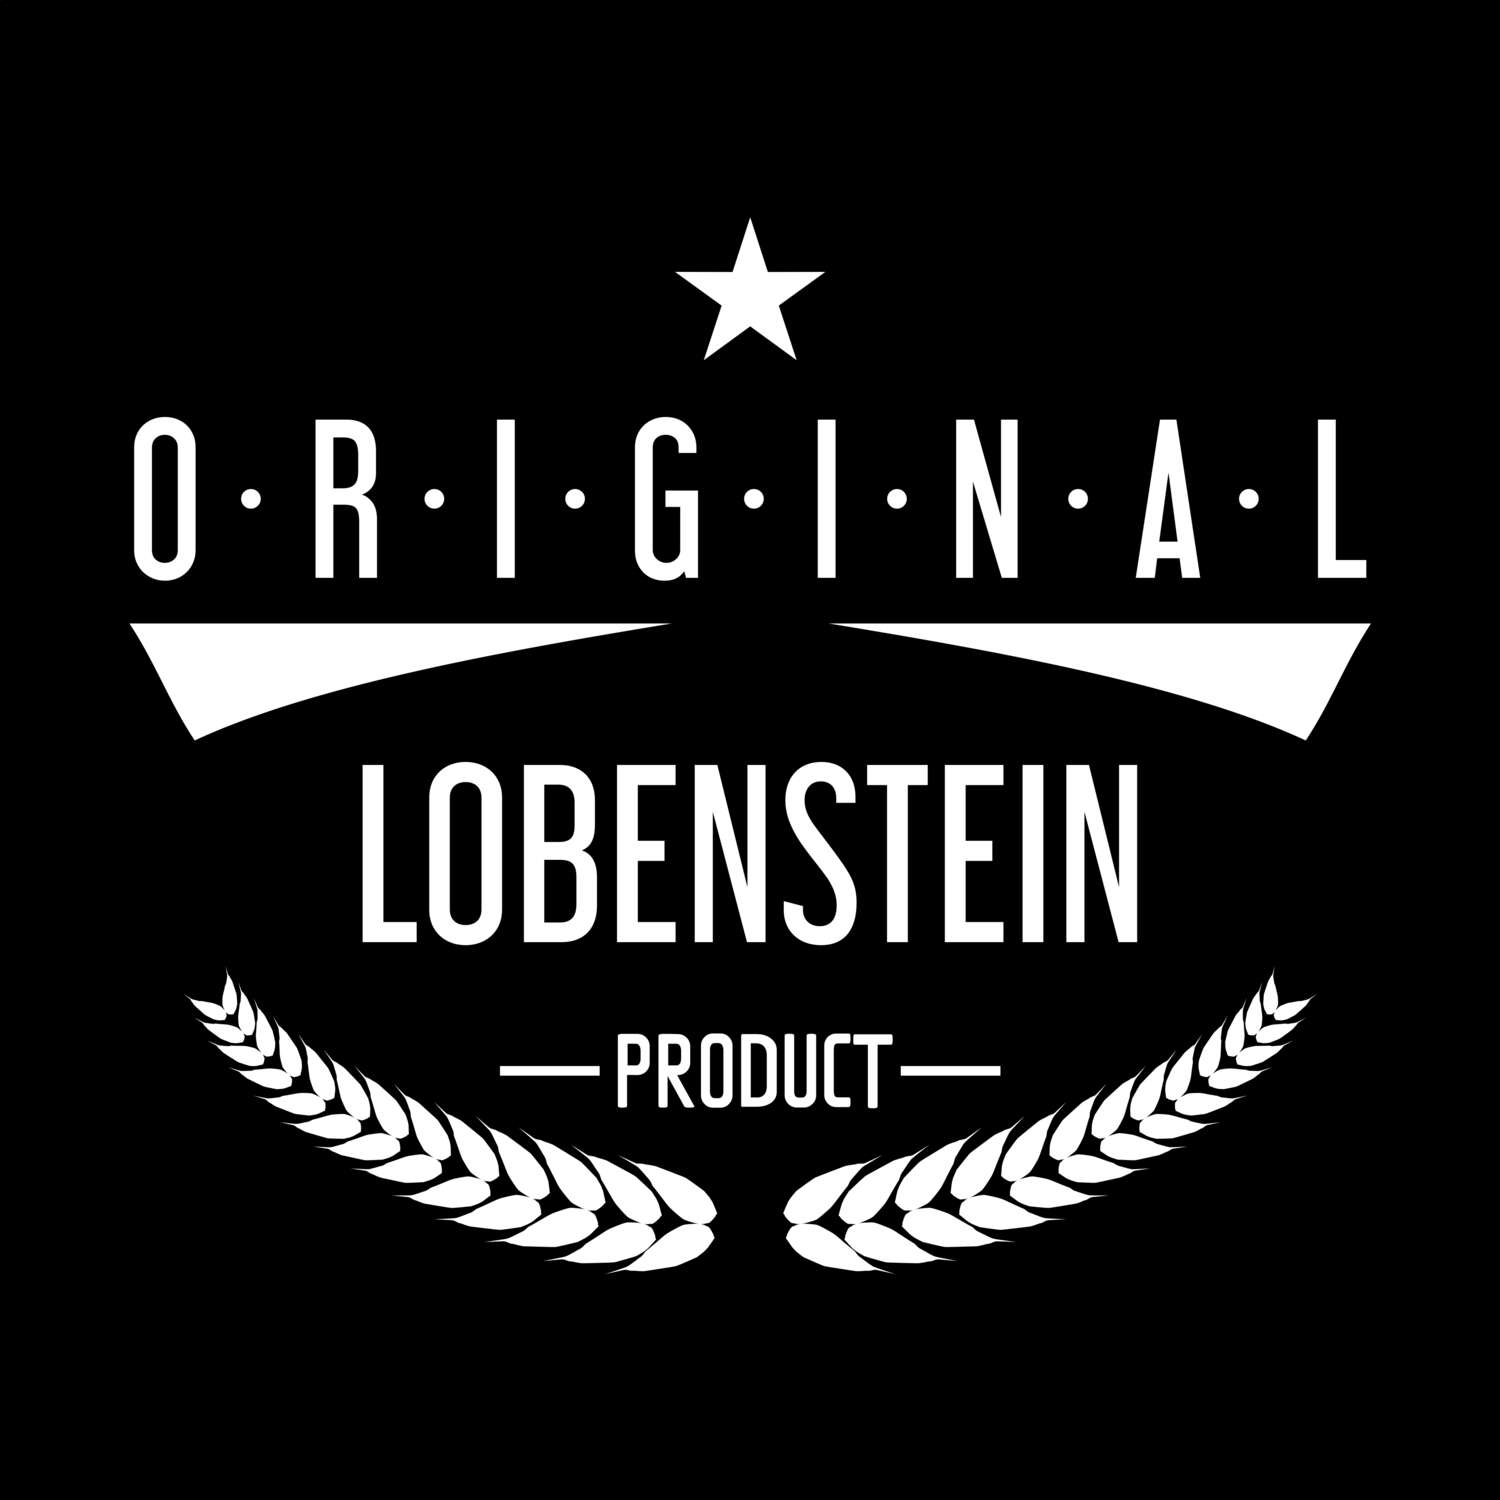 Lobenstein T-Shirt »Original Product«